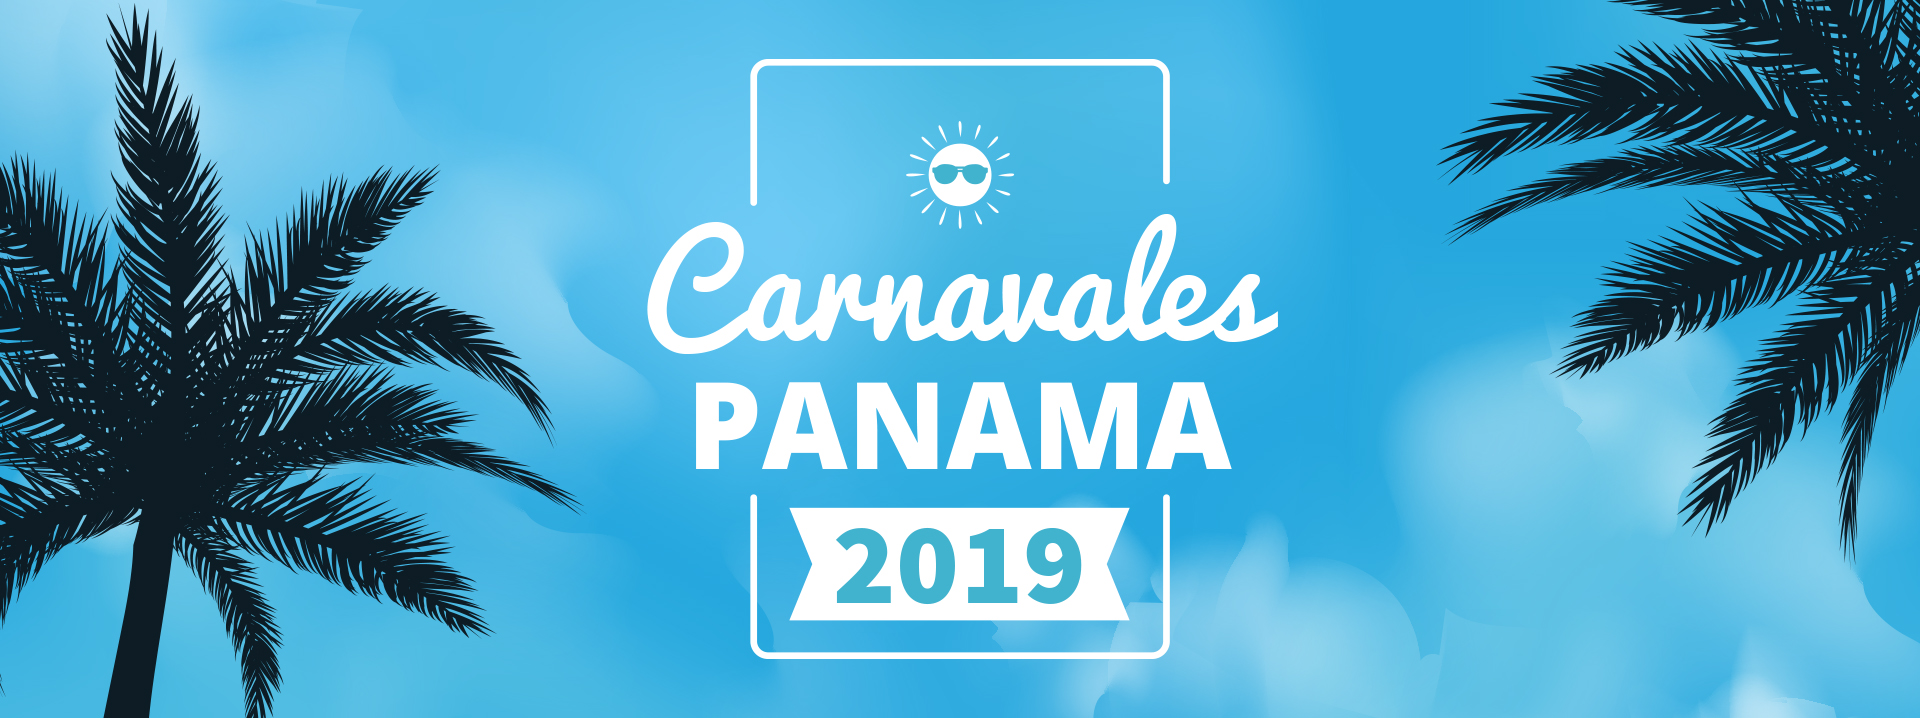 Carnavales Panama 2019